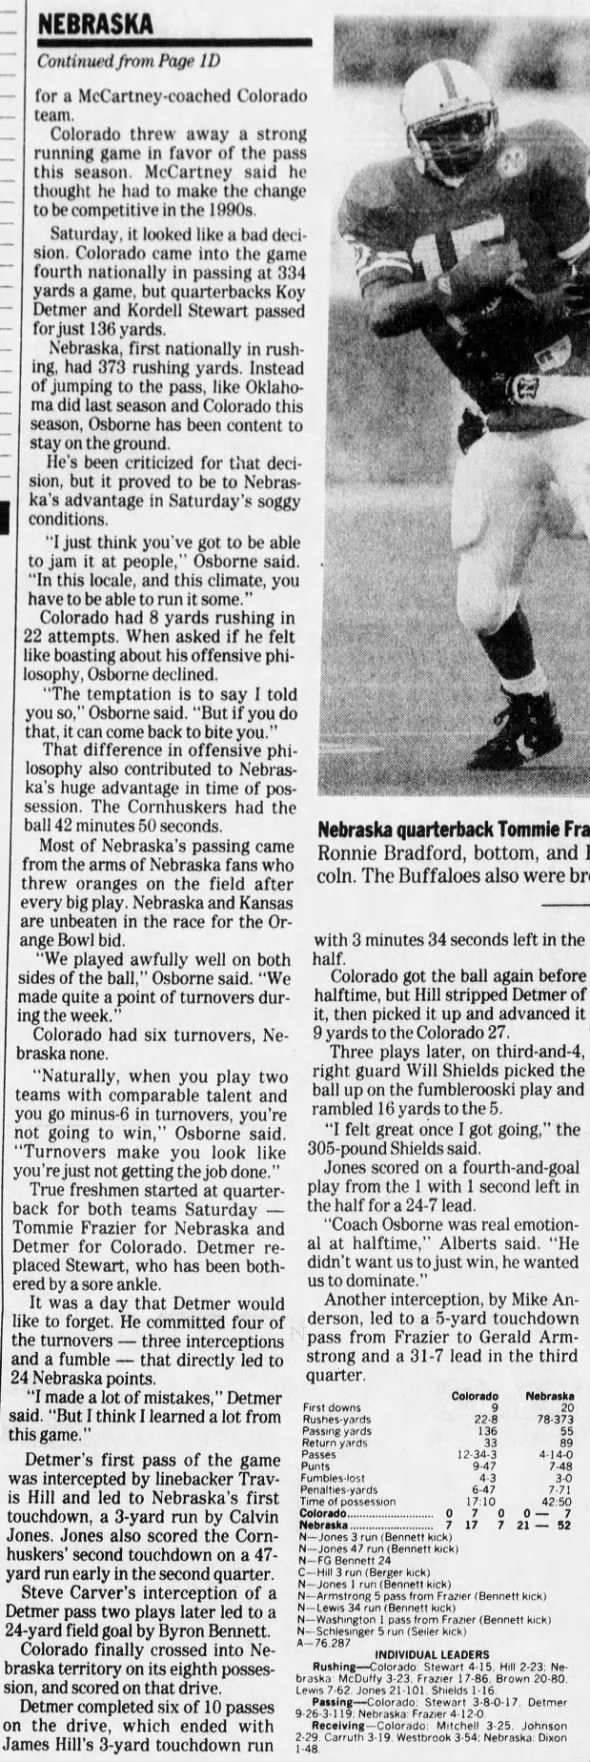 1992 Nebraska-Colorado, Des Moines Register part 2